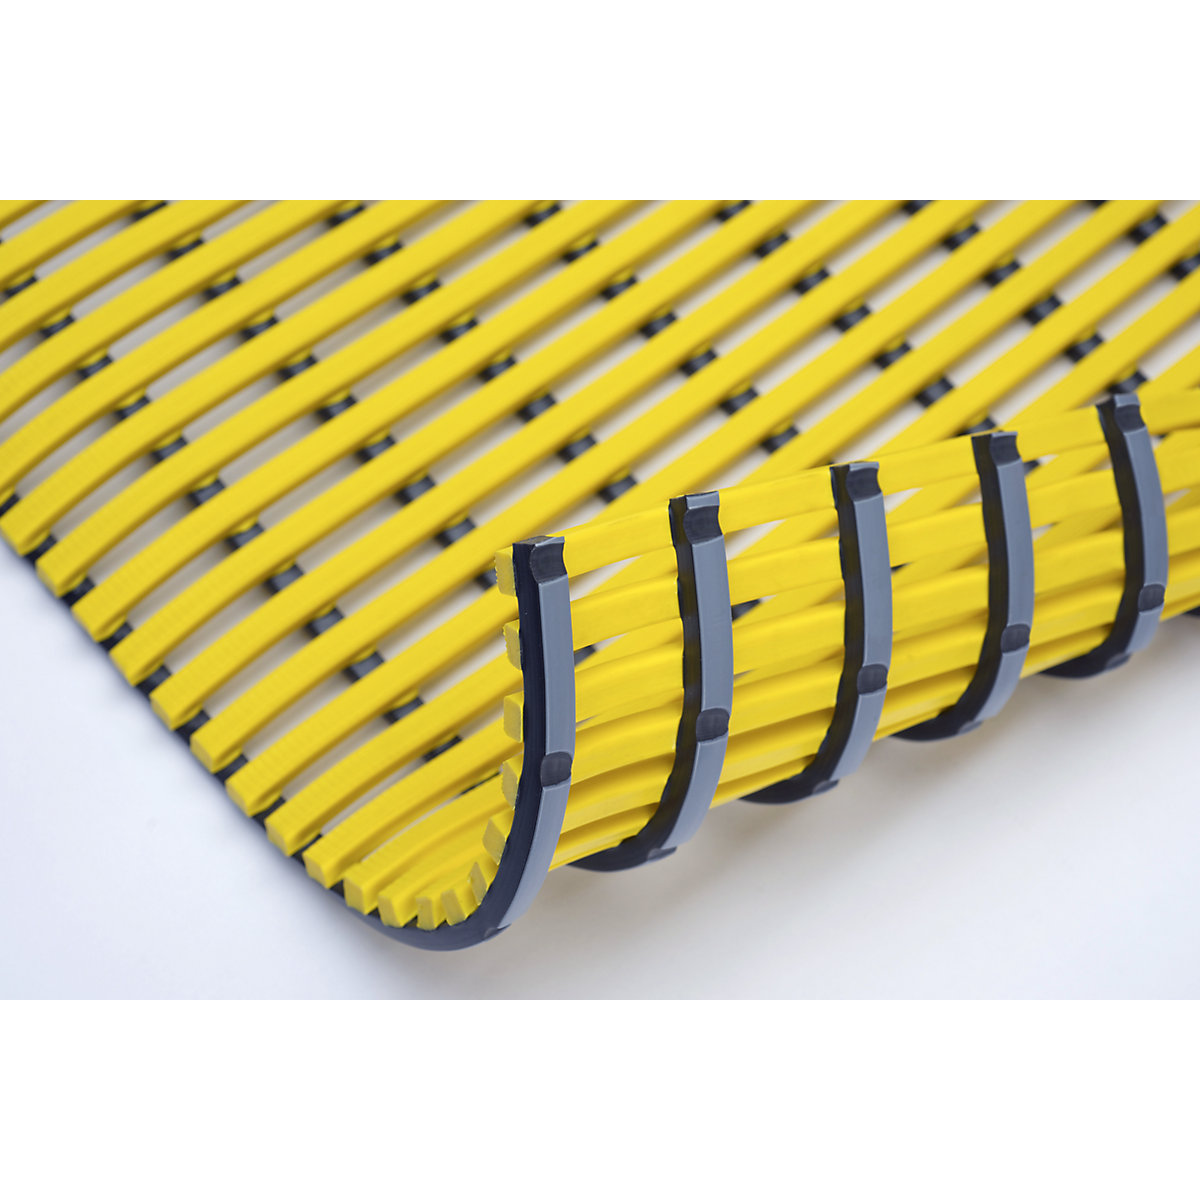 Wet room mat, anti-bacterial – EHA, per metre, yellow, width 600 mm-5